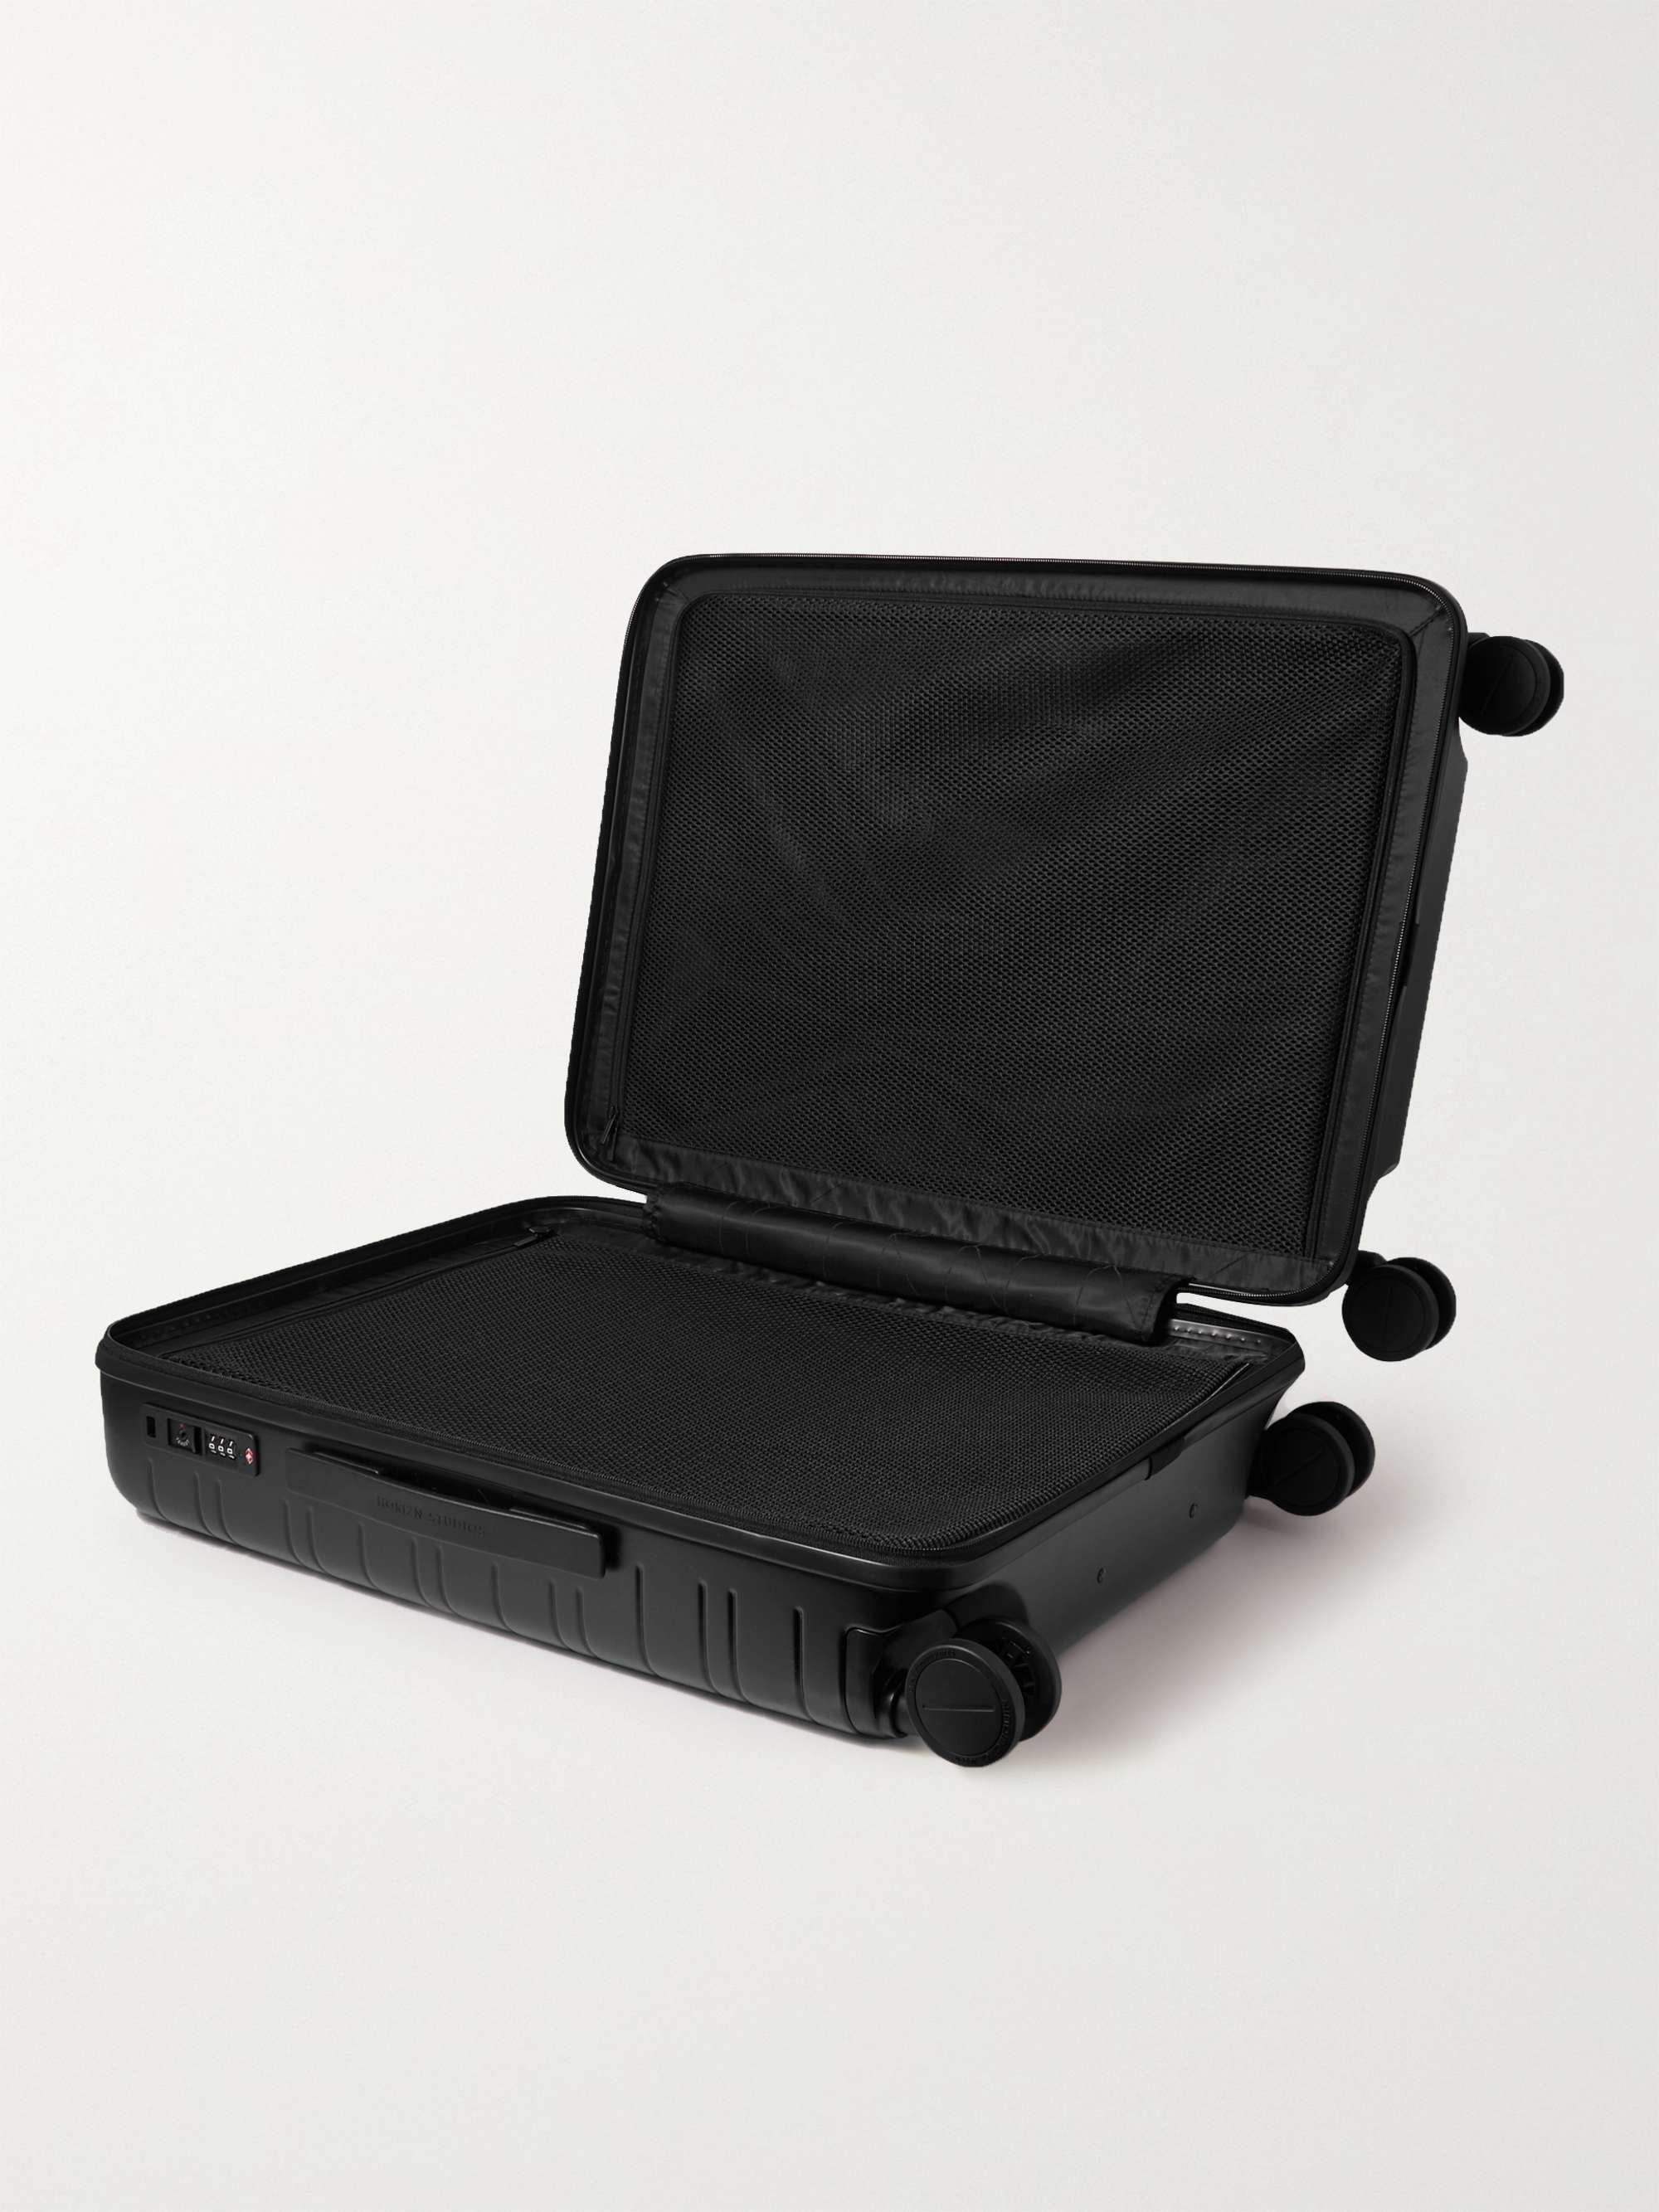 HORIZN STUDIOS H6 Essential 64cm Polycarbonate Check-In Suitcase